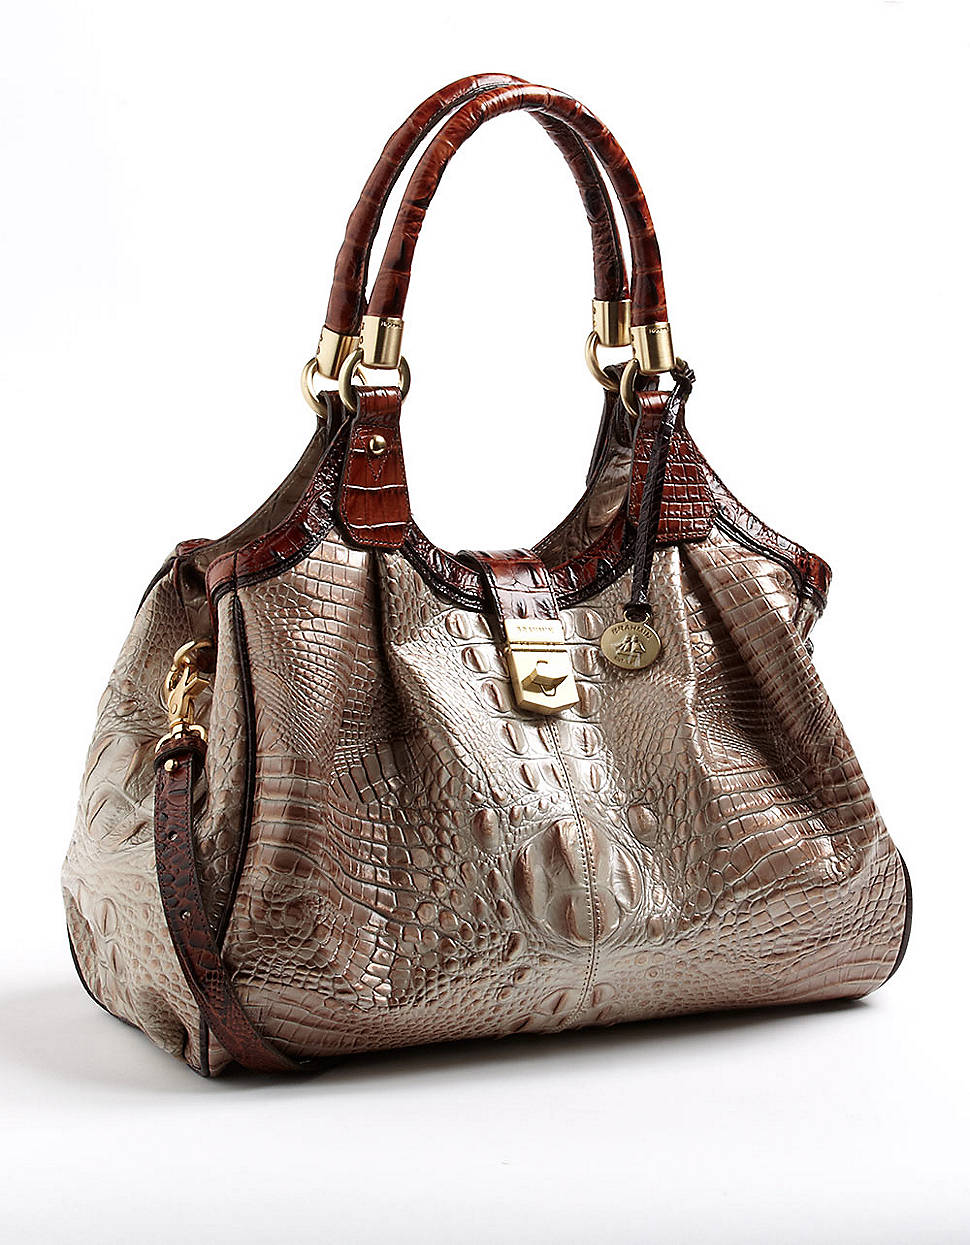 Lyst - Brahmin Leather Croc effect Handbag in Brown